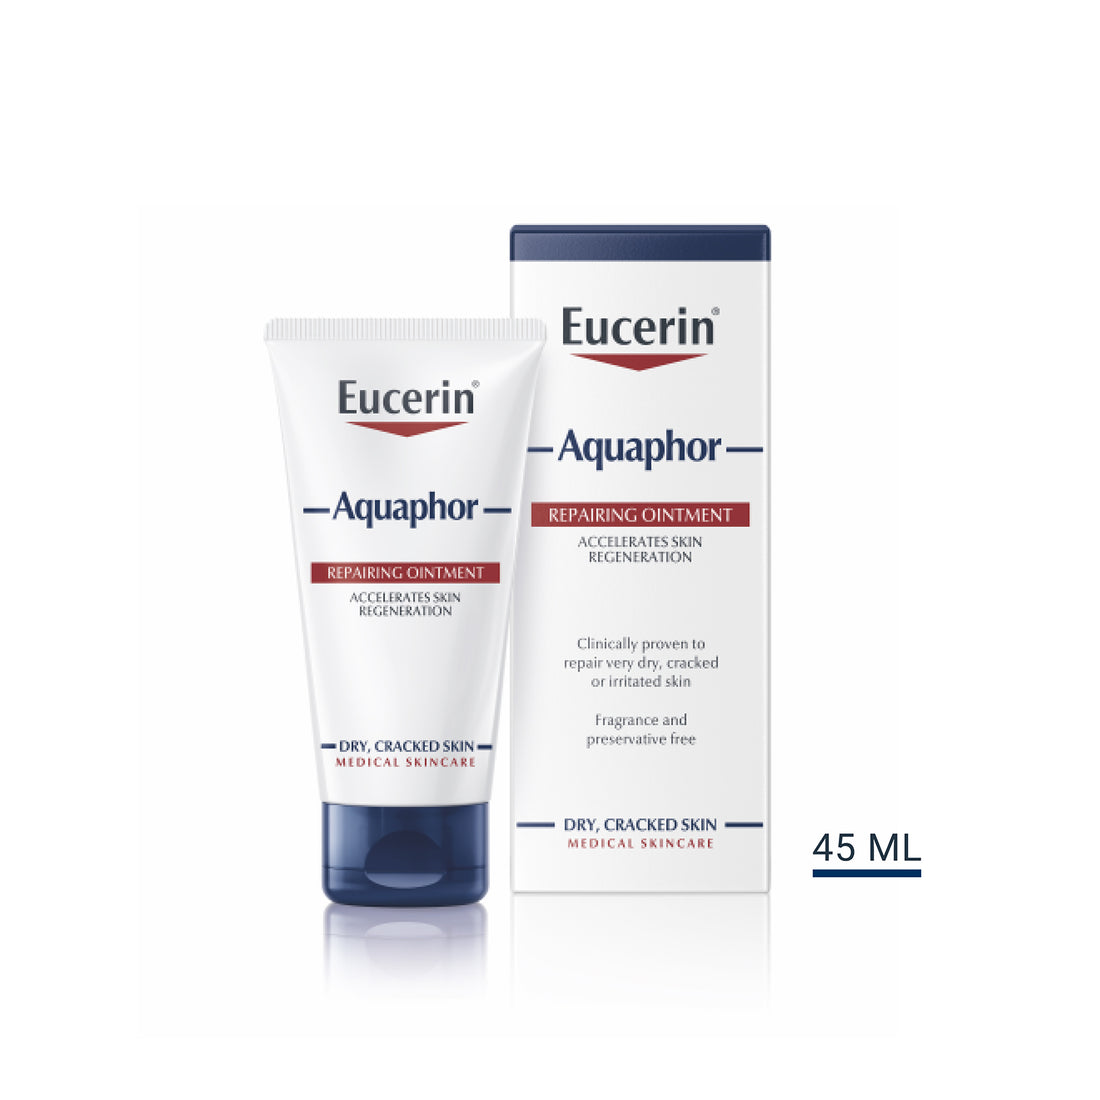 Eucerin Aquaphor Repairing Ointment 45ml (1.52fl oz)